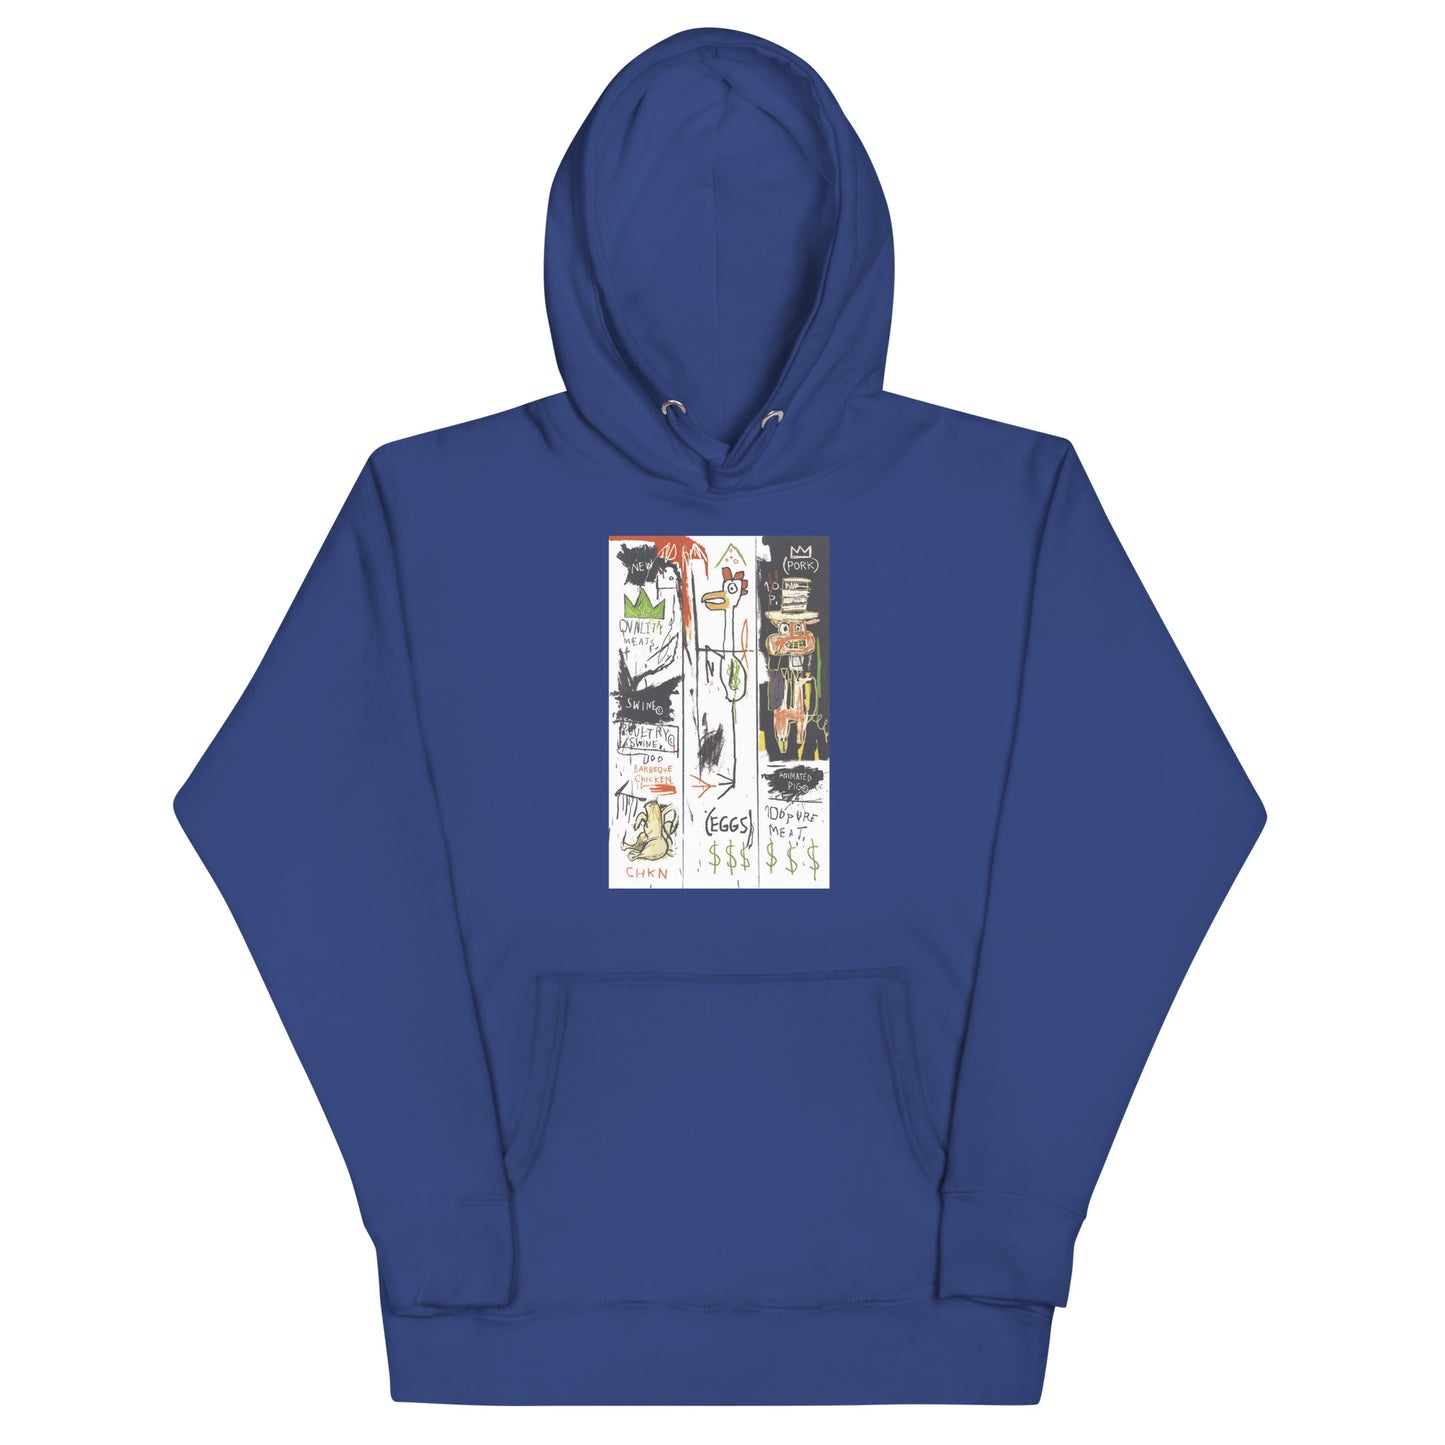 Jean-Michel Basquiat "Quality Meats for the Public" 1982 Artwork Printed Premium Streetwear Sweatshirt Hoodie Royal Blue